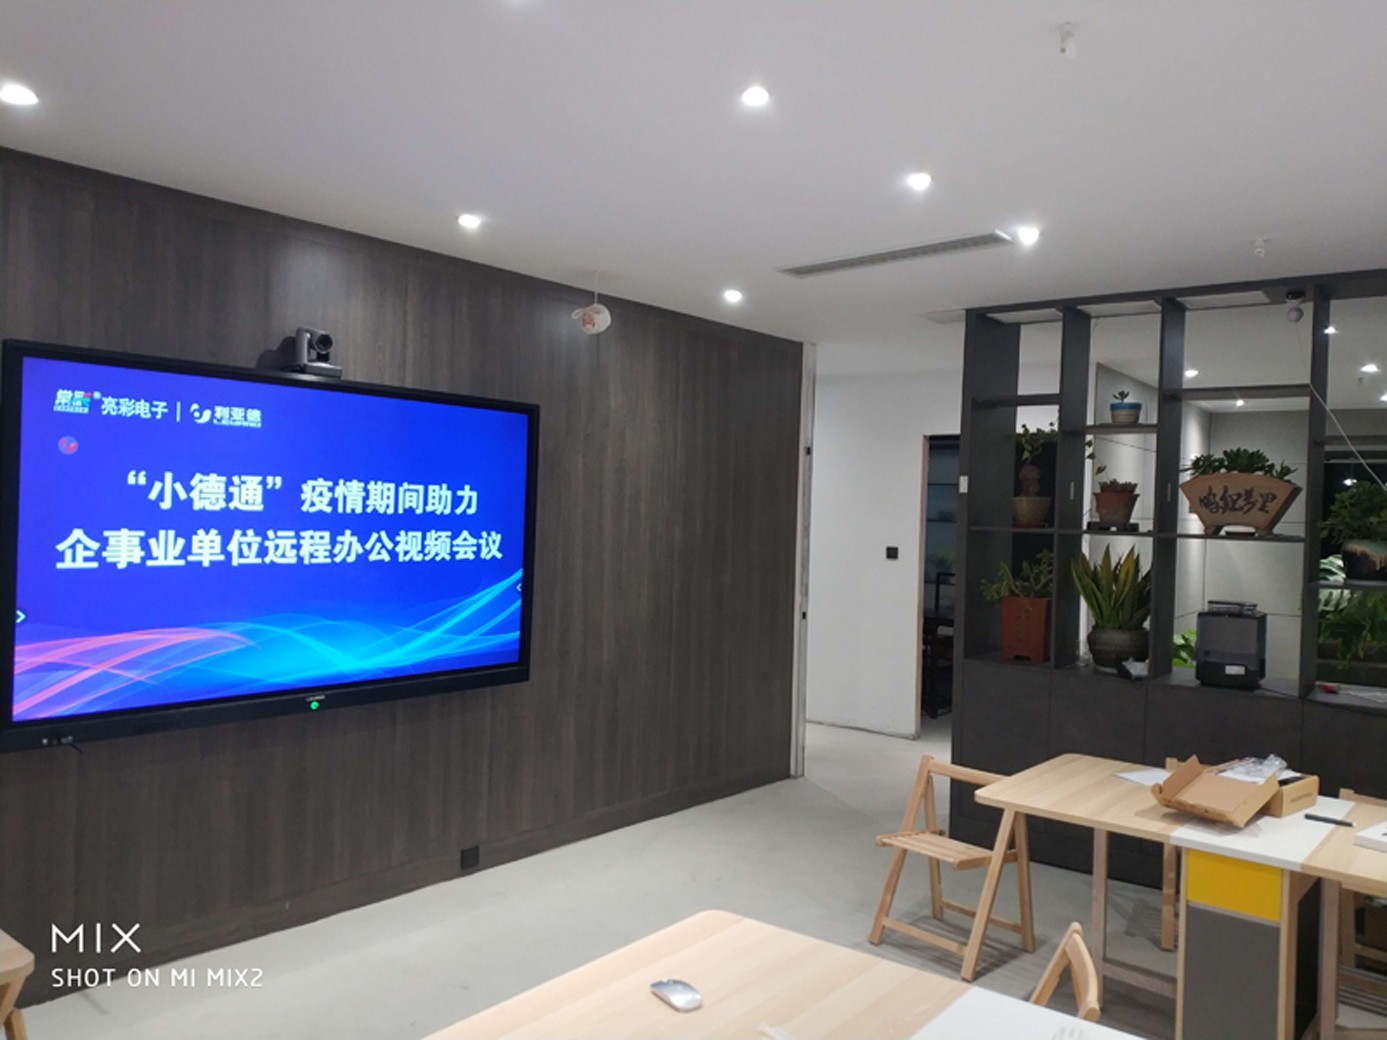 Jiangsu a design co., LTD., 86 - inch LCD all-in-one meeting